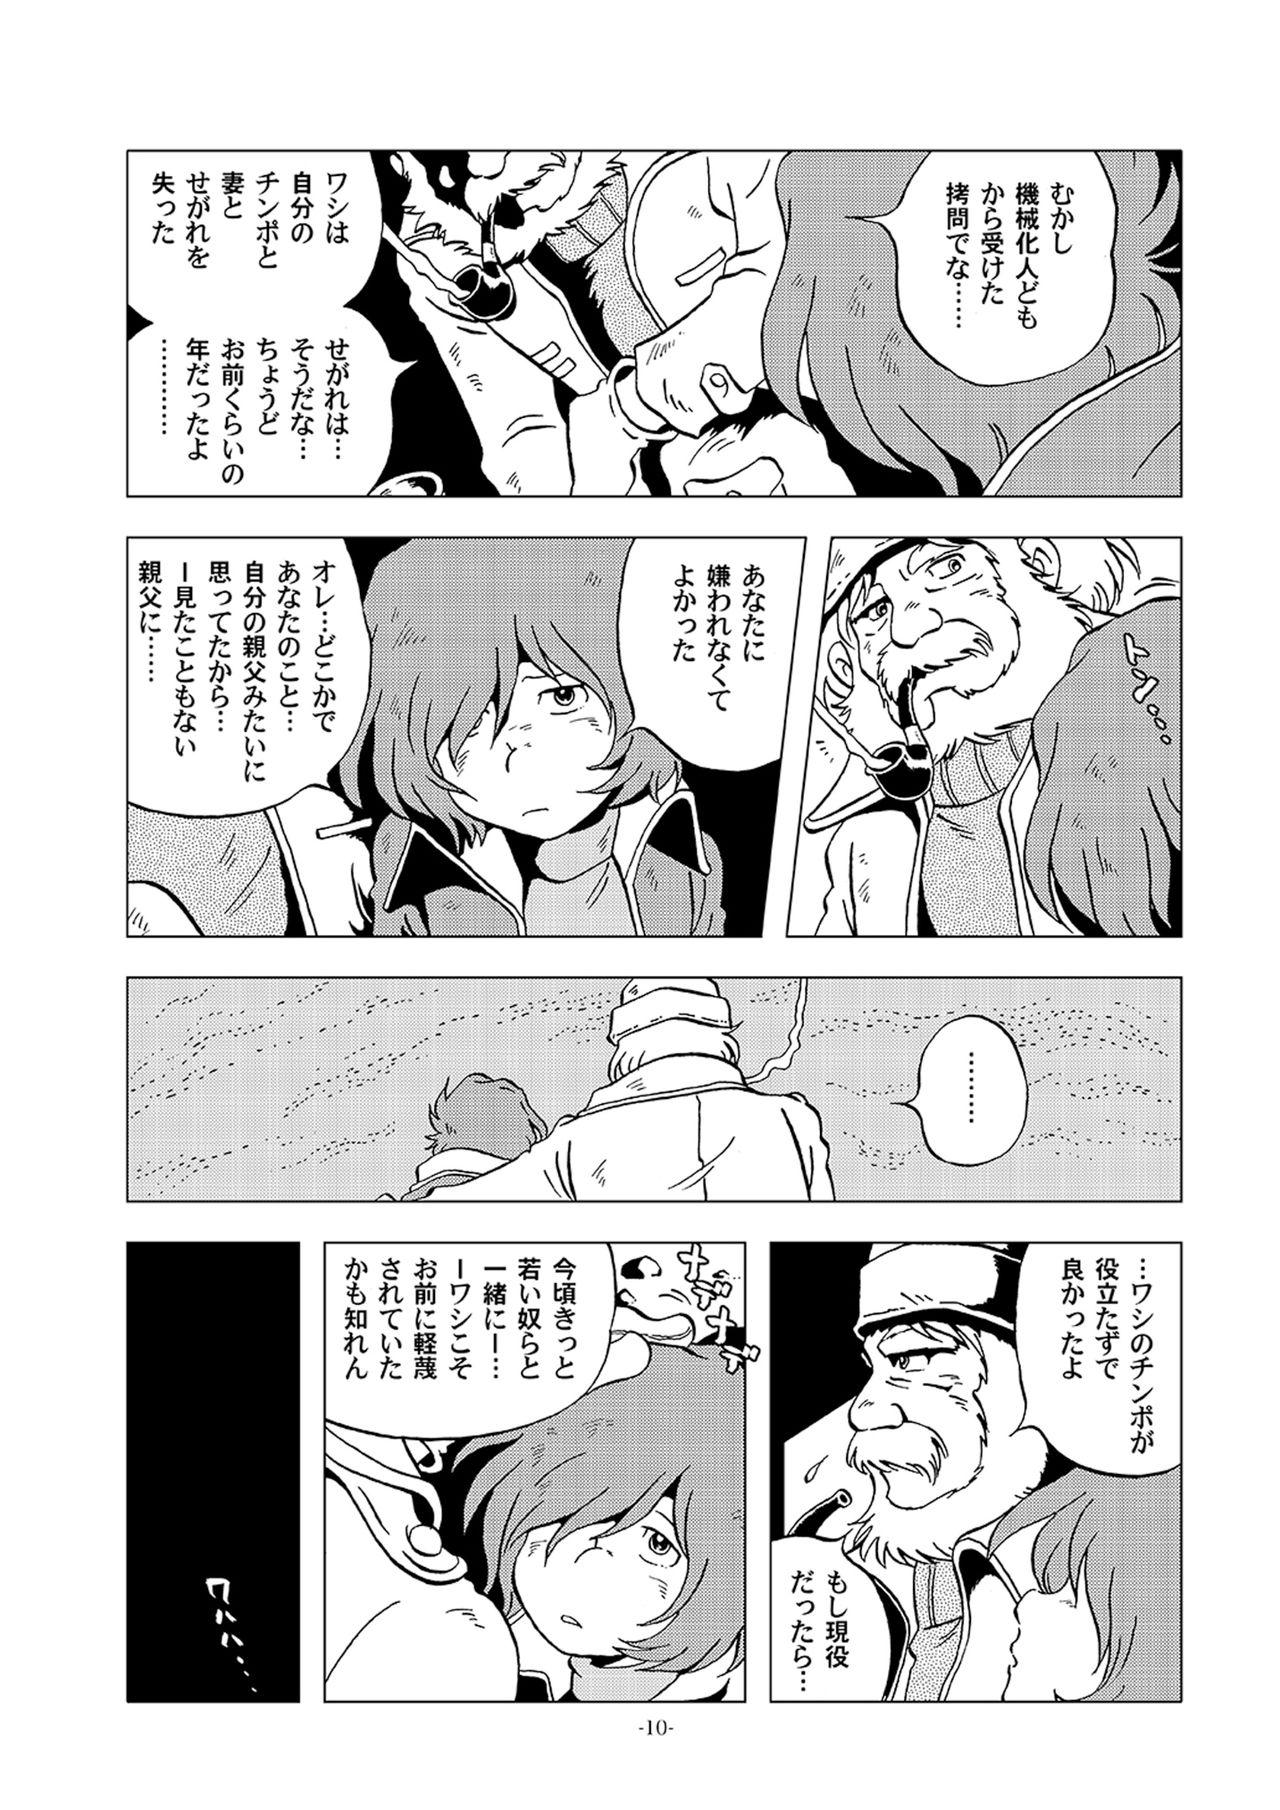 Cheating Tetsuro Legend Partisan Hen - Galaxy express 999 Teenage Sex - Page 10